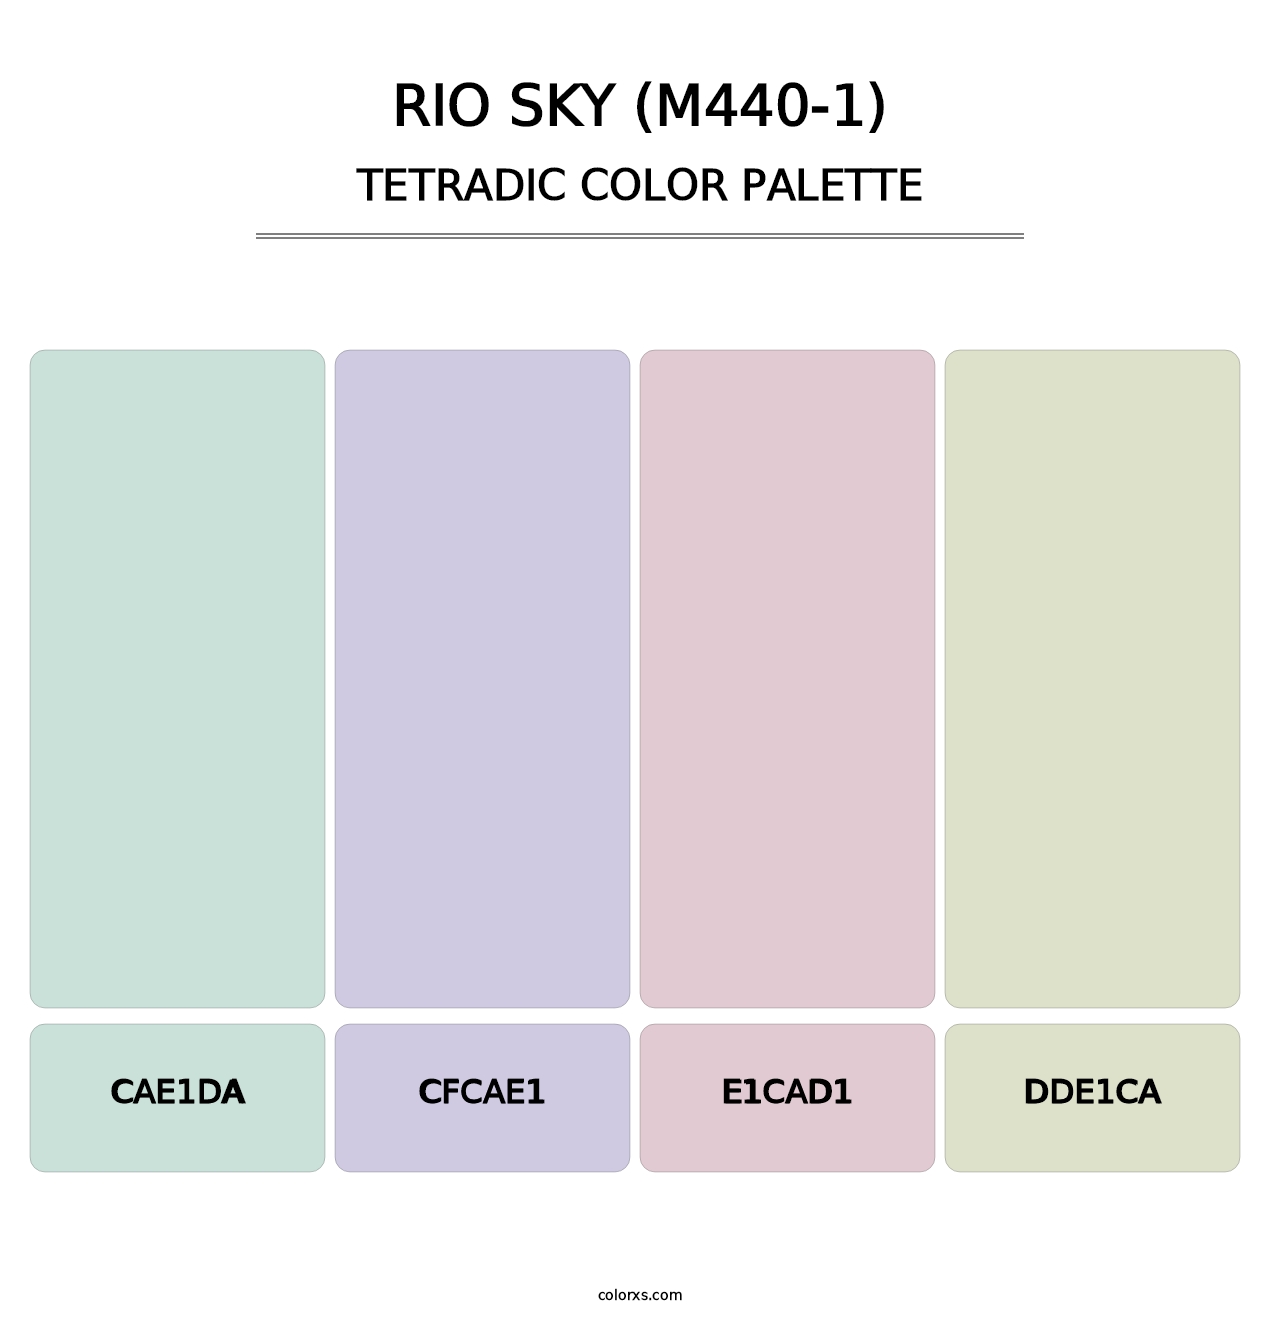 Rio Sky (M440-1) - Tetradic Color Palette